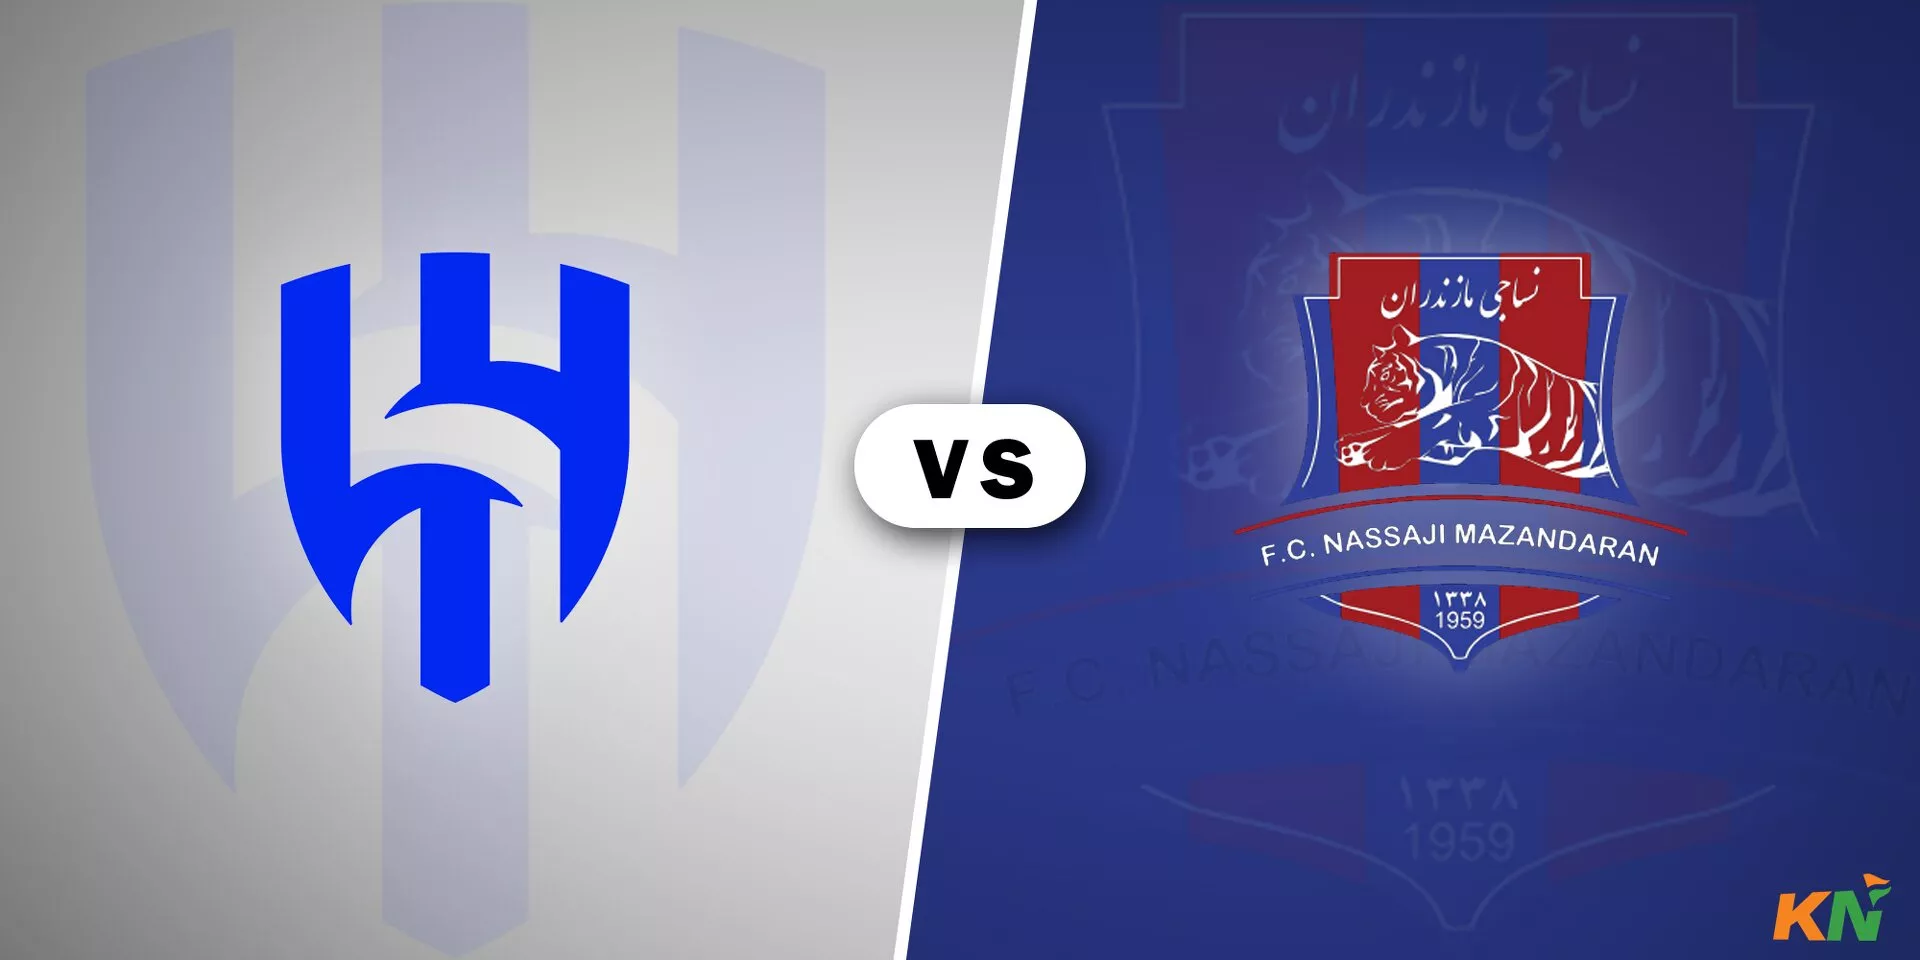 Al Hilal vs Nassaji Mazandaran: Predicted lineup, injury news, head-to-head, telecast